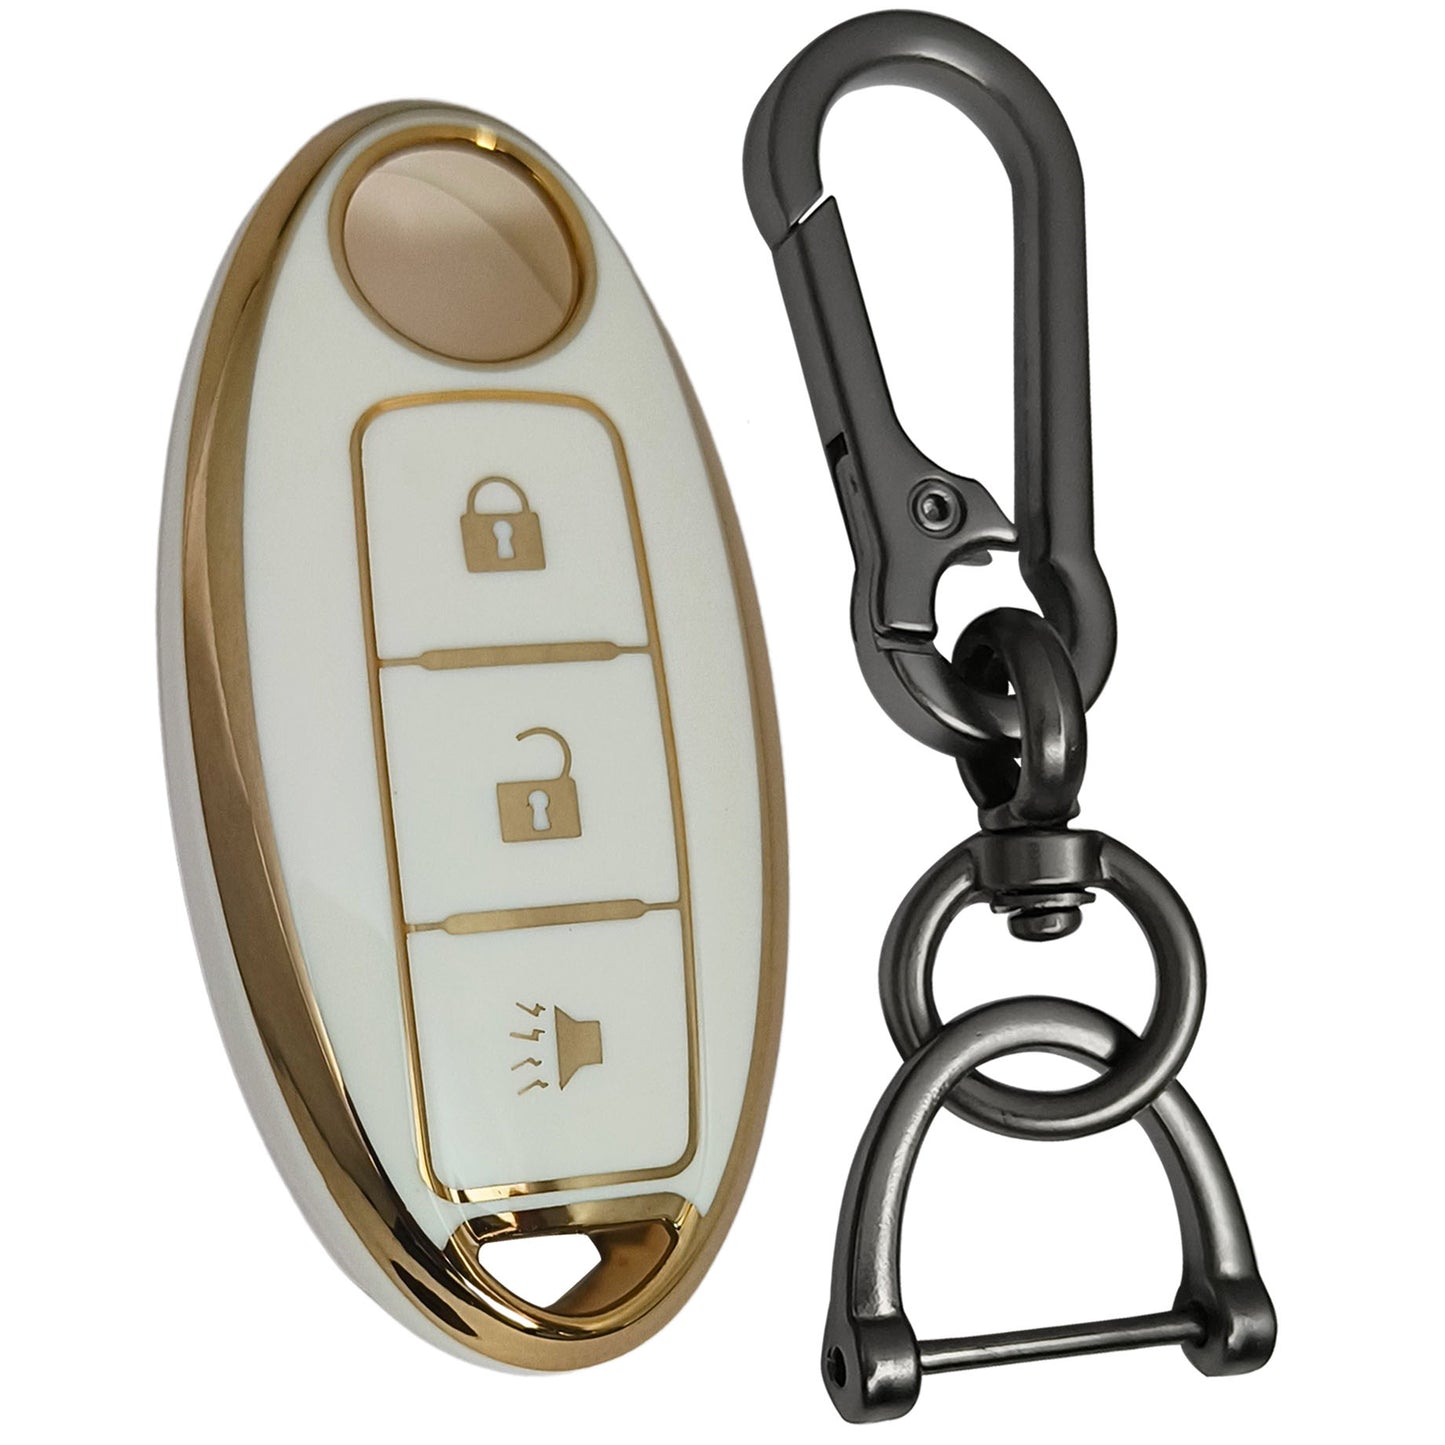 nissan micra sunny teana magnite 3 button smart key keychain white gold